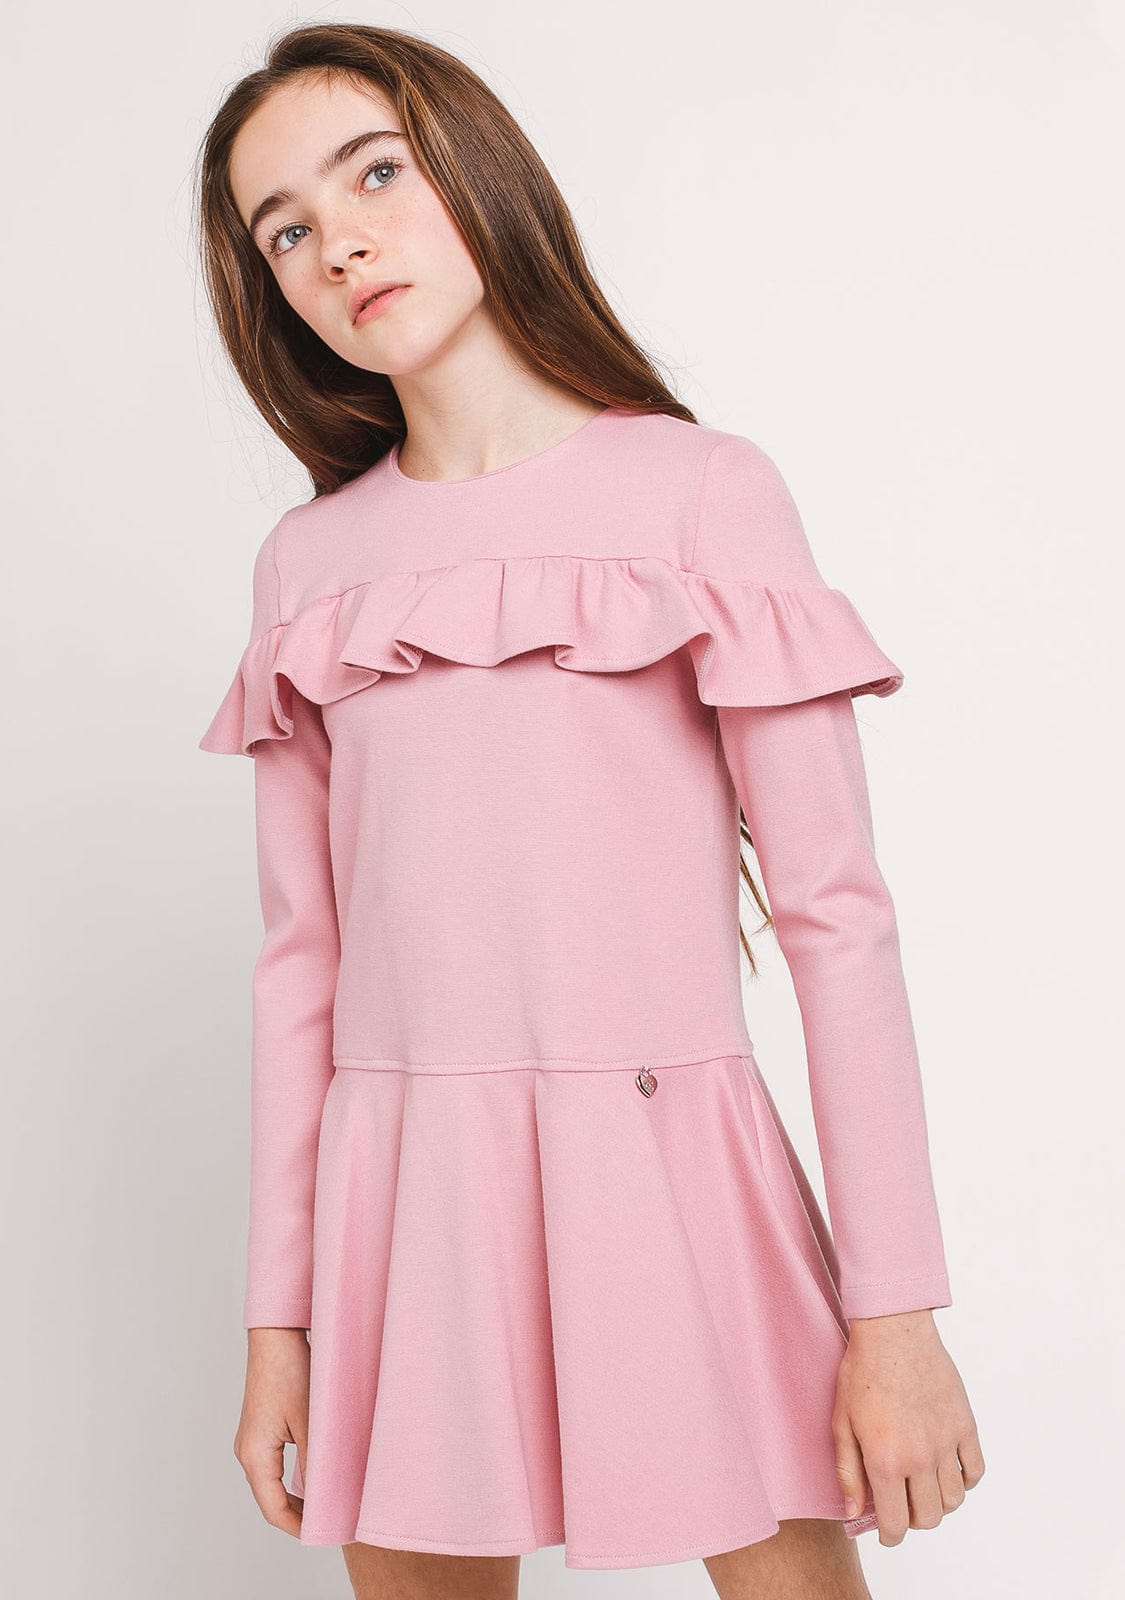 CONGUITOS TEXTIL Clothing Girl's Pink Ruffled Dress